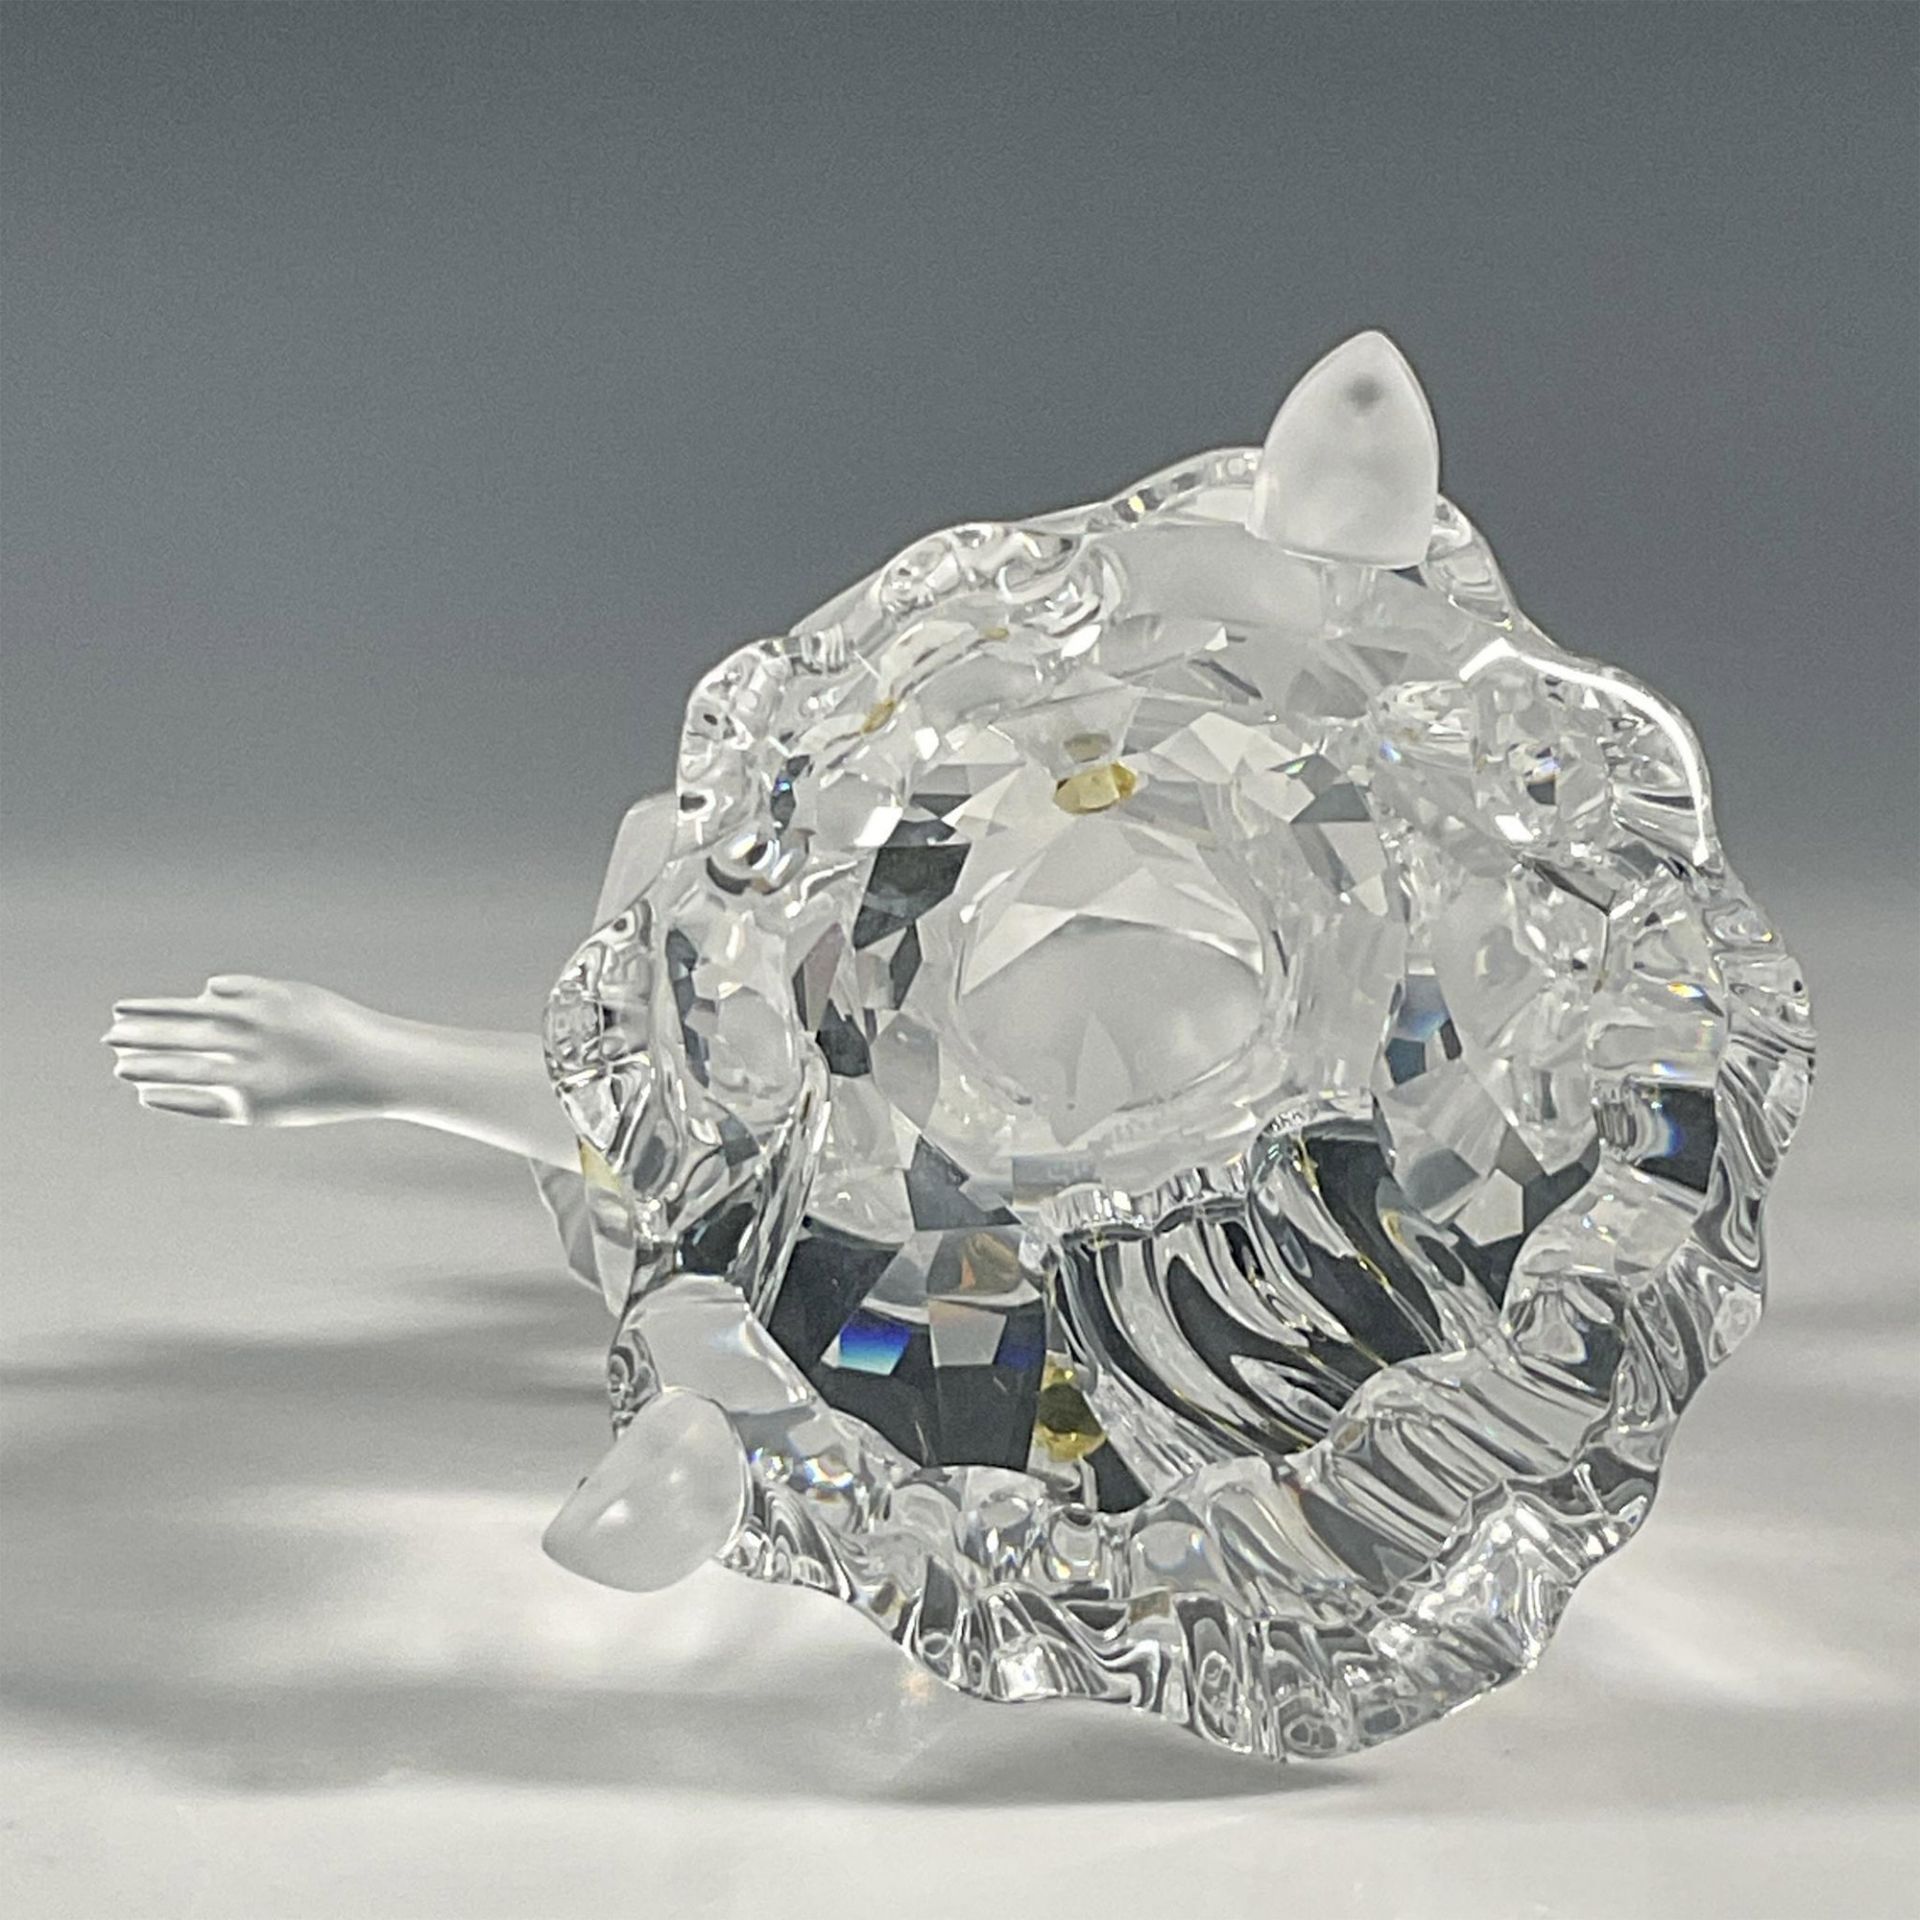 3pc Swarovski Crystal Figurine and Accessories, Columbine - Image 5 of 5